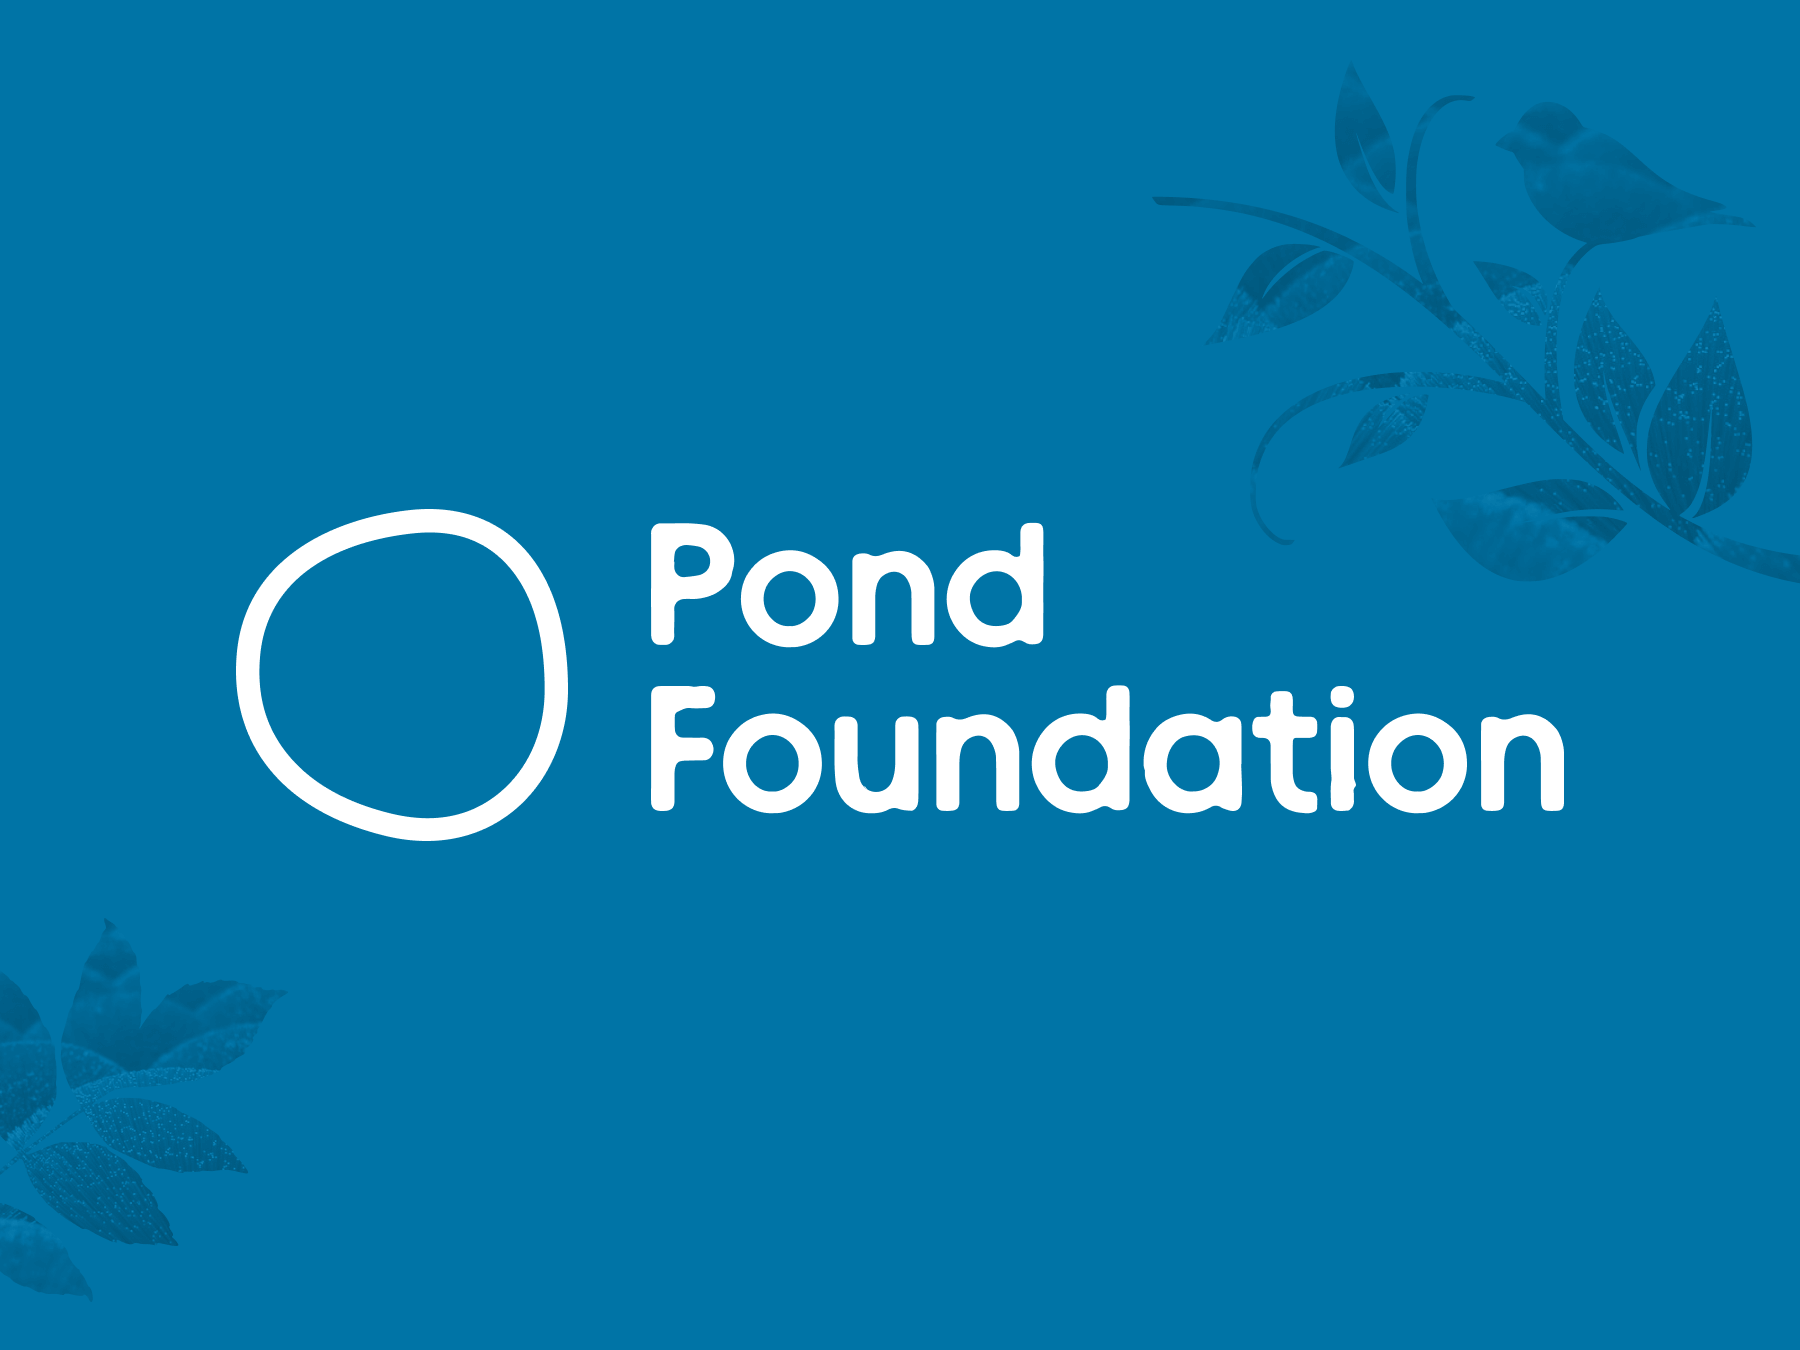 Pond Foundation